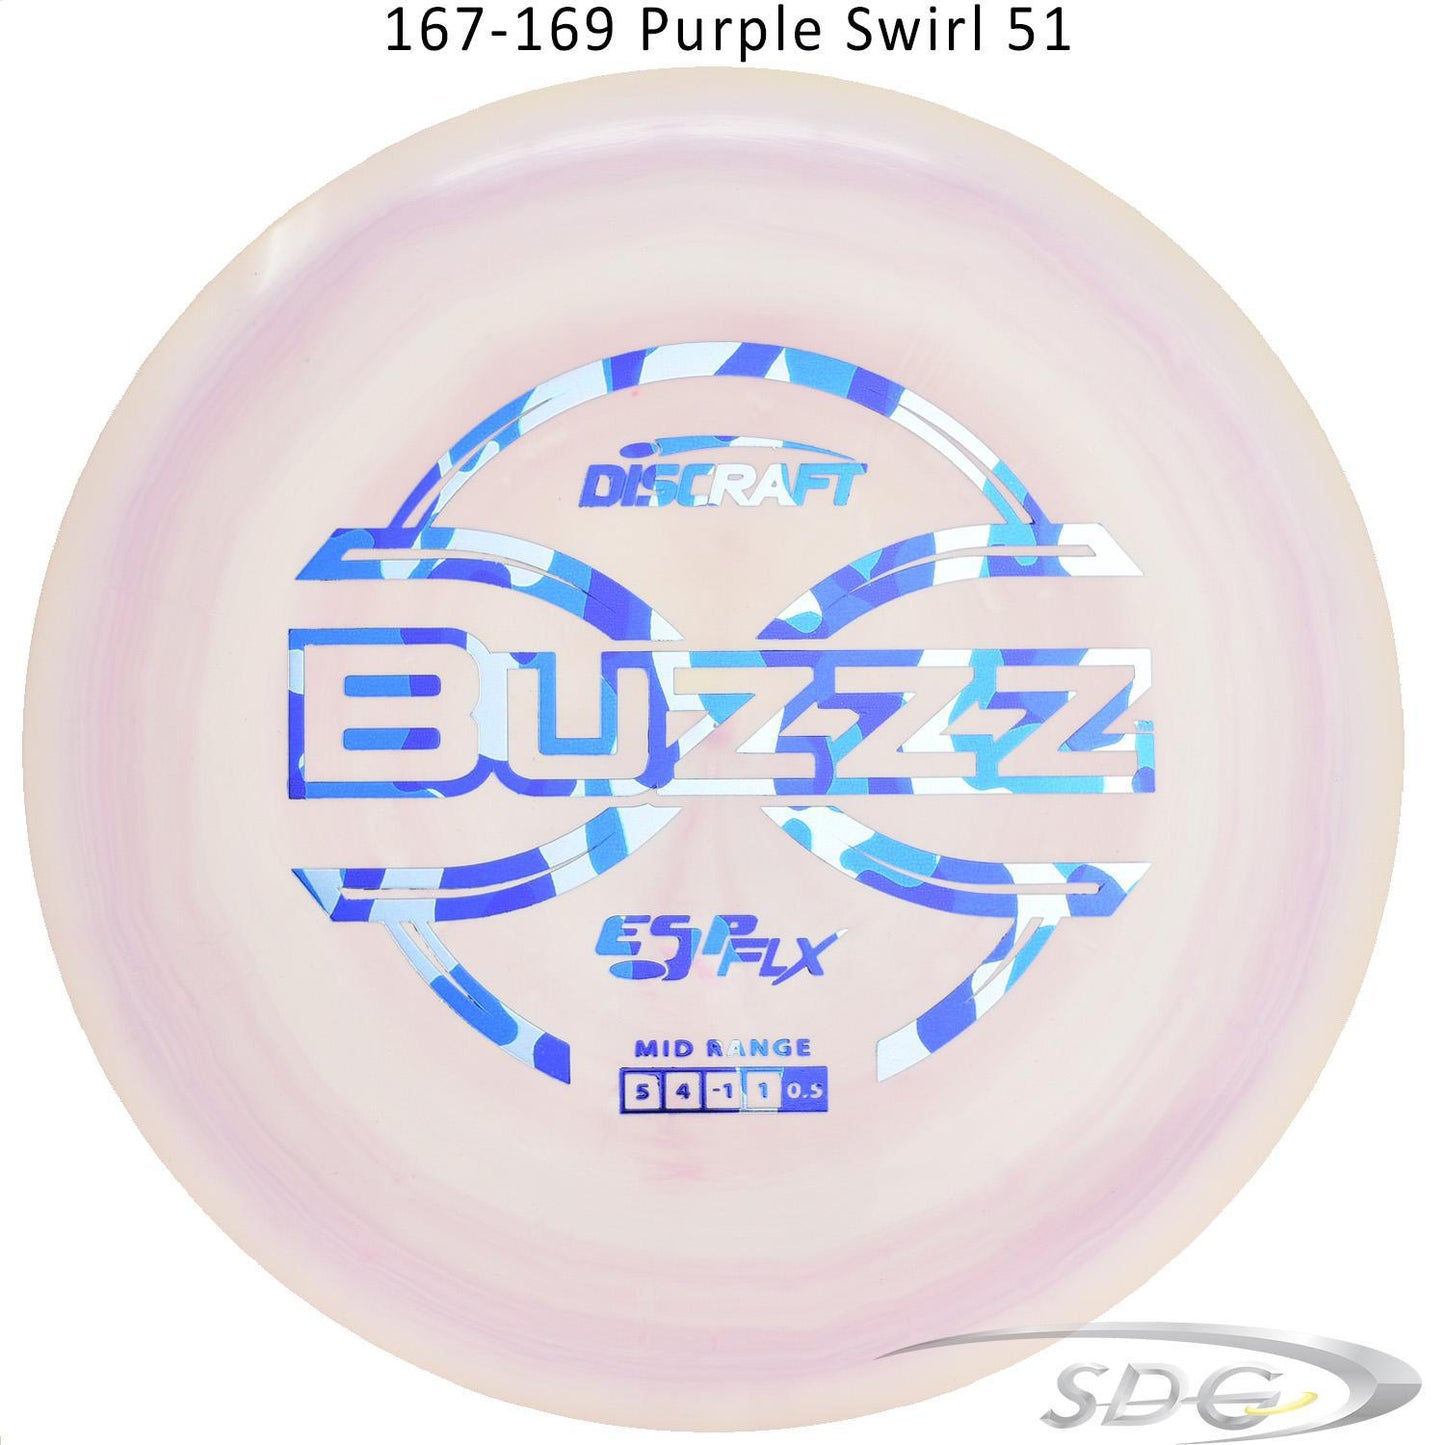 dicraft-esp-flx-buzzz-disc-golf-mid-range 167-169 Purple Swirl 51